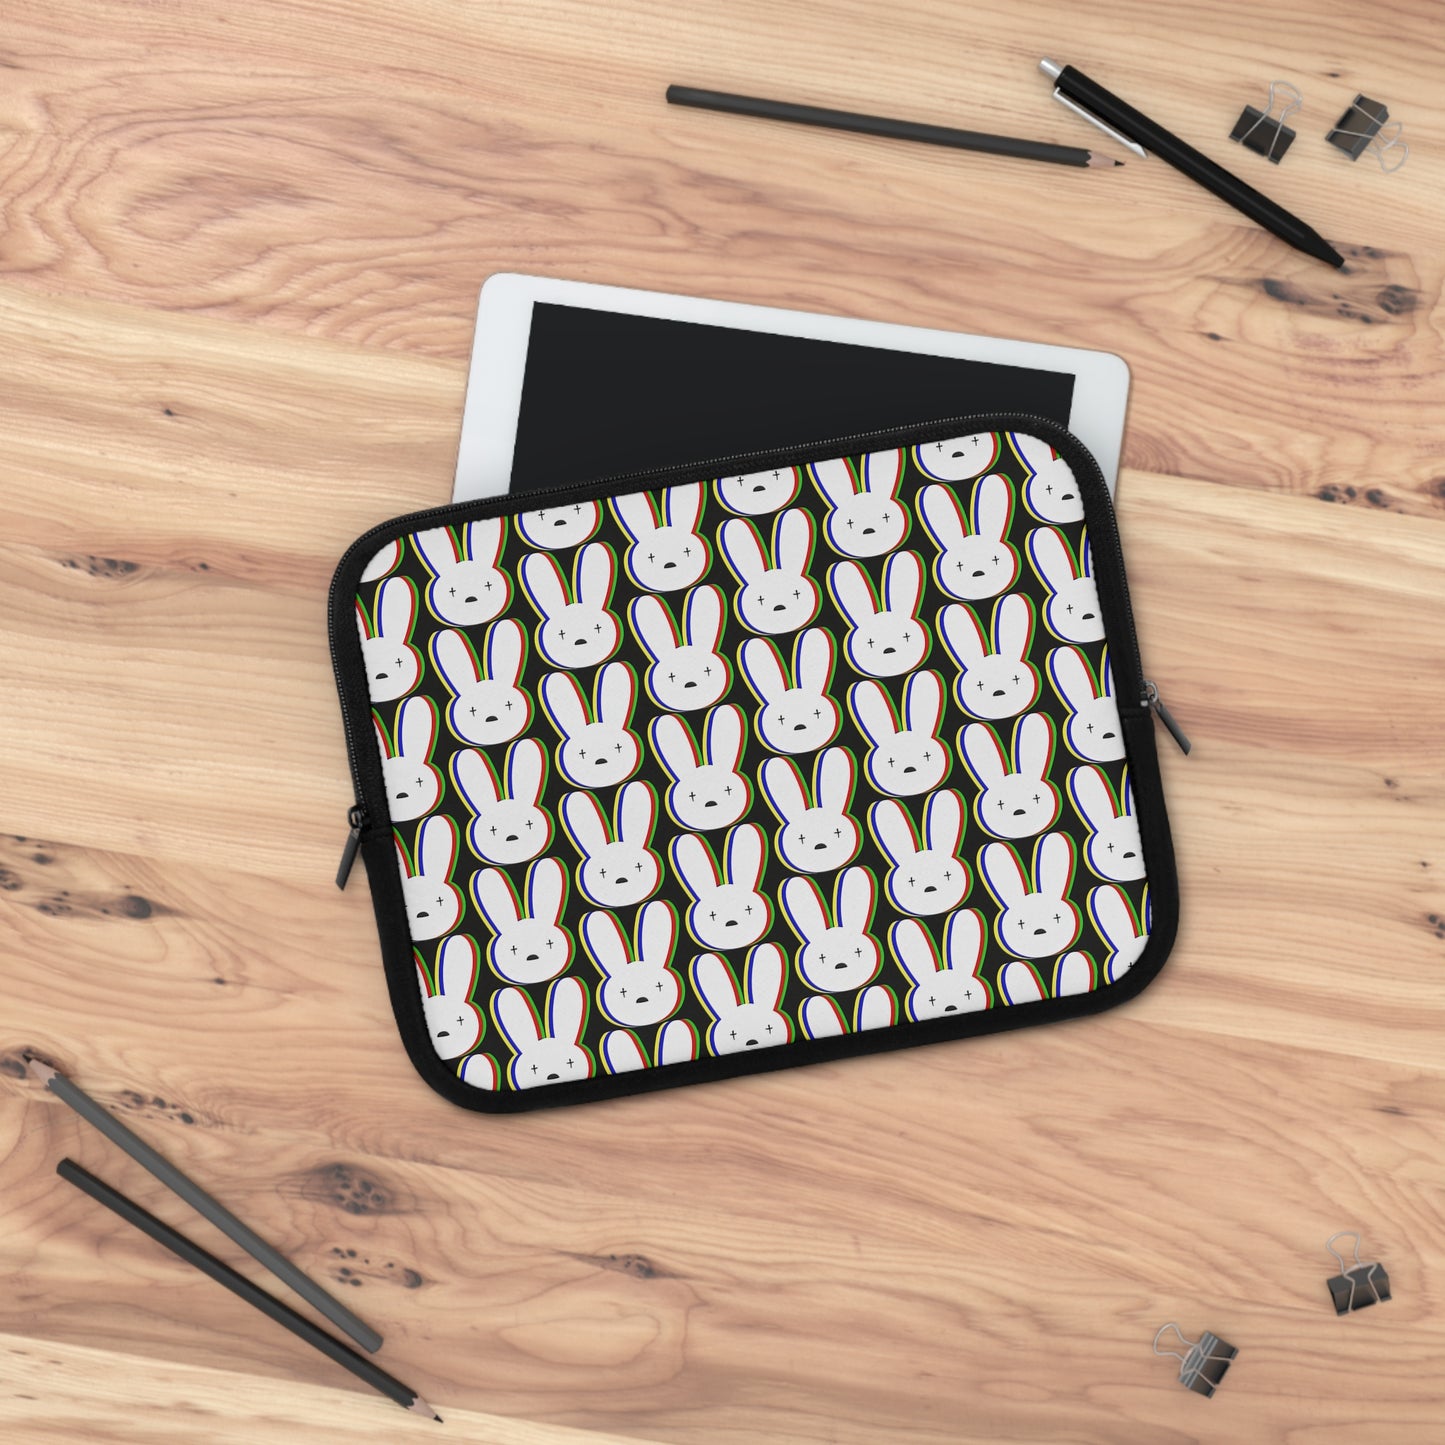 Bad Bunny Logo Pattern Laptop Sleeve